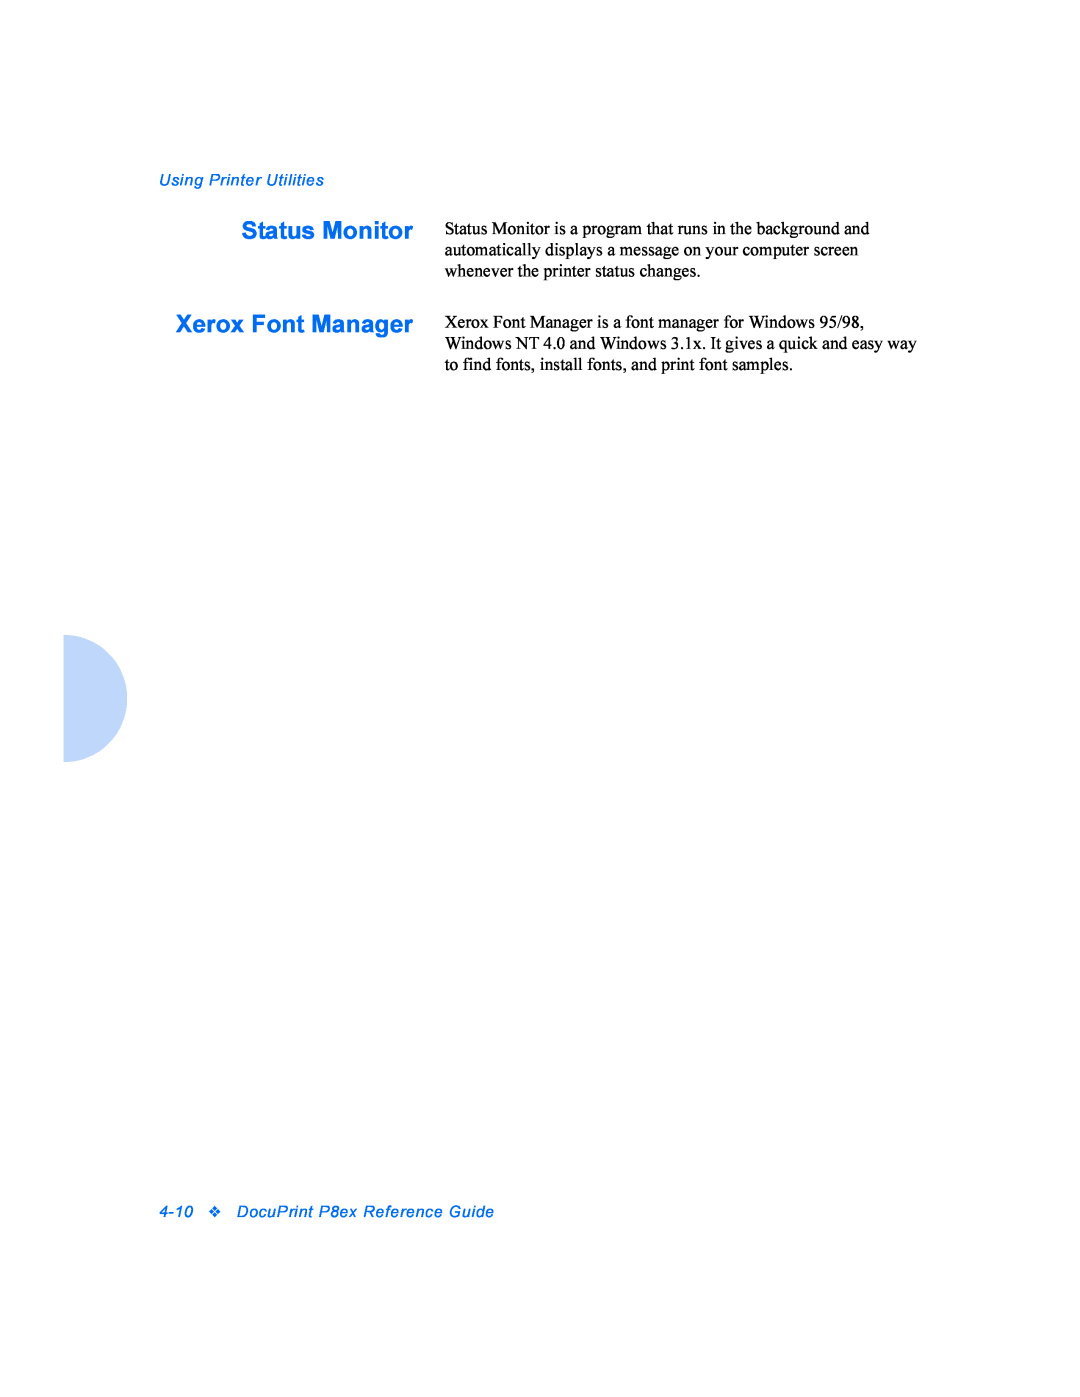 Xerox manual Status Monitor Xerox Font Manager, Using Printer Utilities, 4-10DocuPrint P8ex Reference Guide 